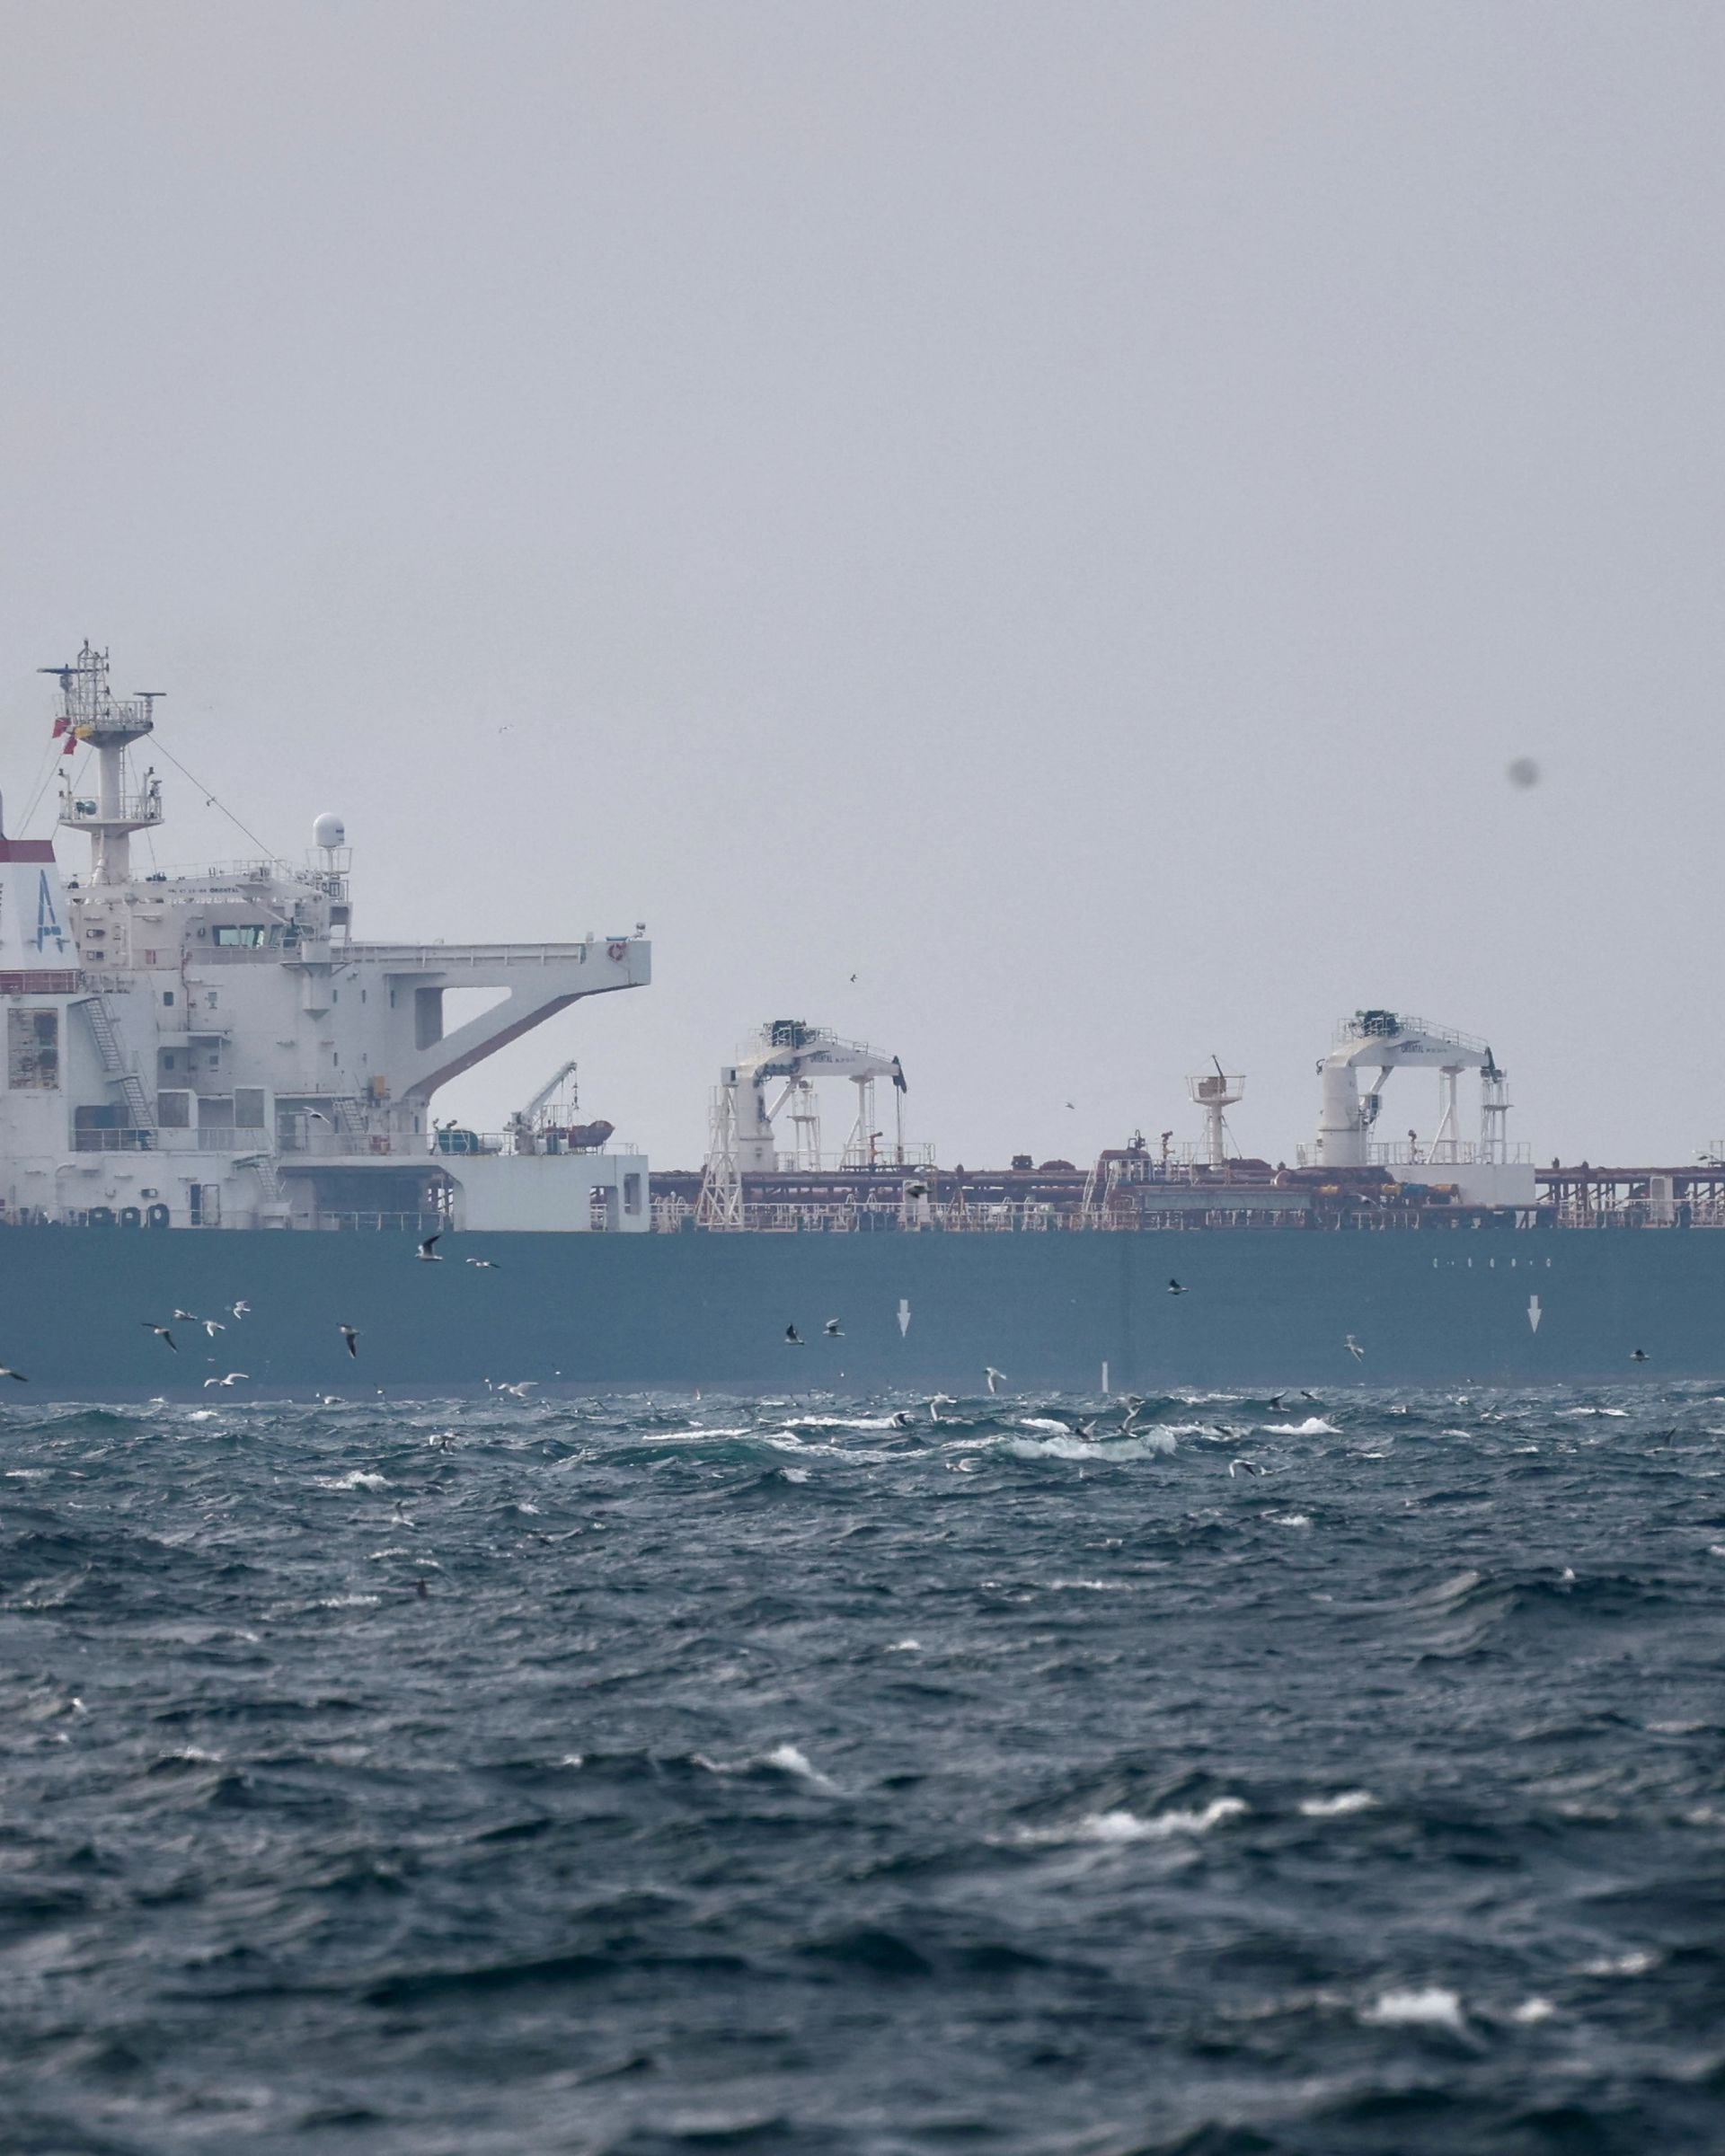 Iran Seizes US Oil Cargo over EB Patients Lawsuit